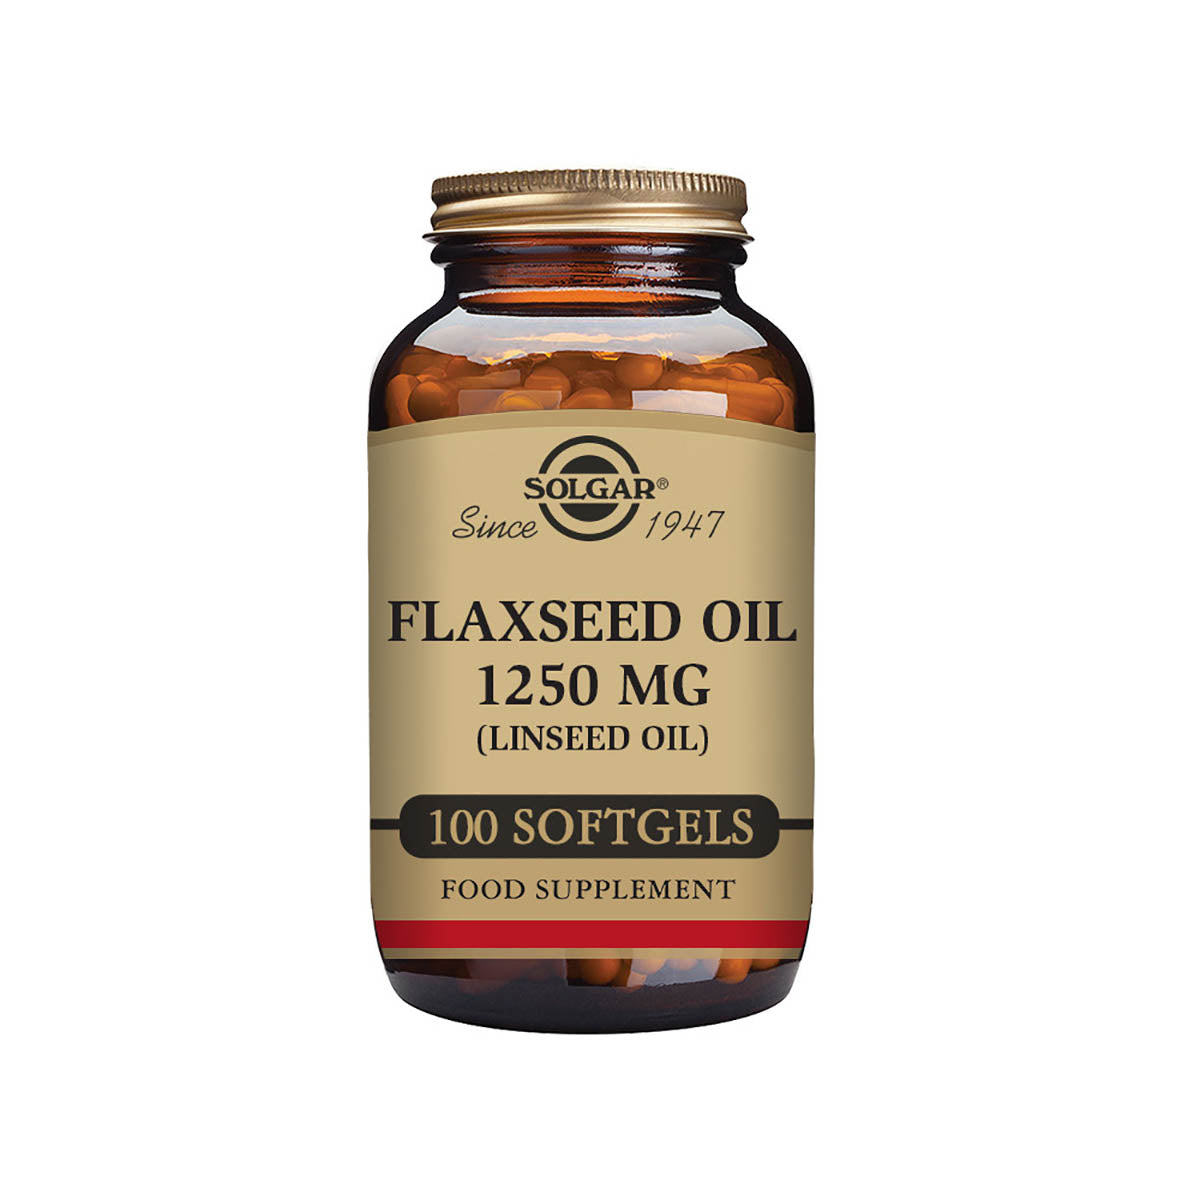 Solgar® Flaxseed Oil 1250 mg Softgels - Pack of 100